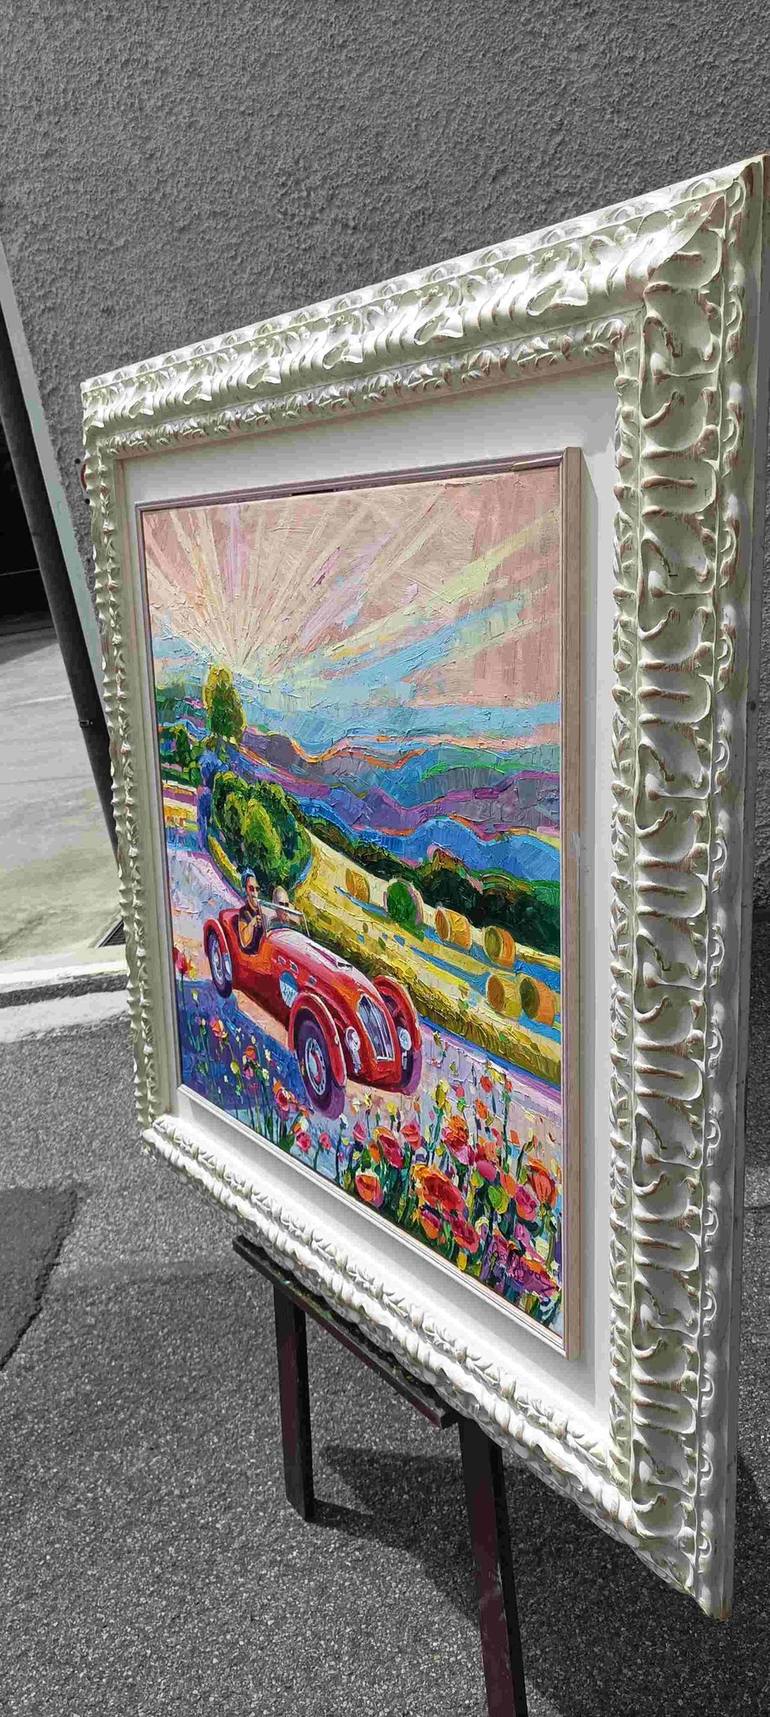 Original Abstract Expressionism Car Painting by Vanya Georgieva